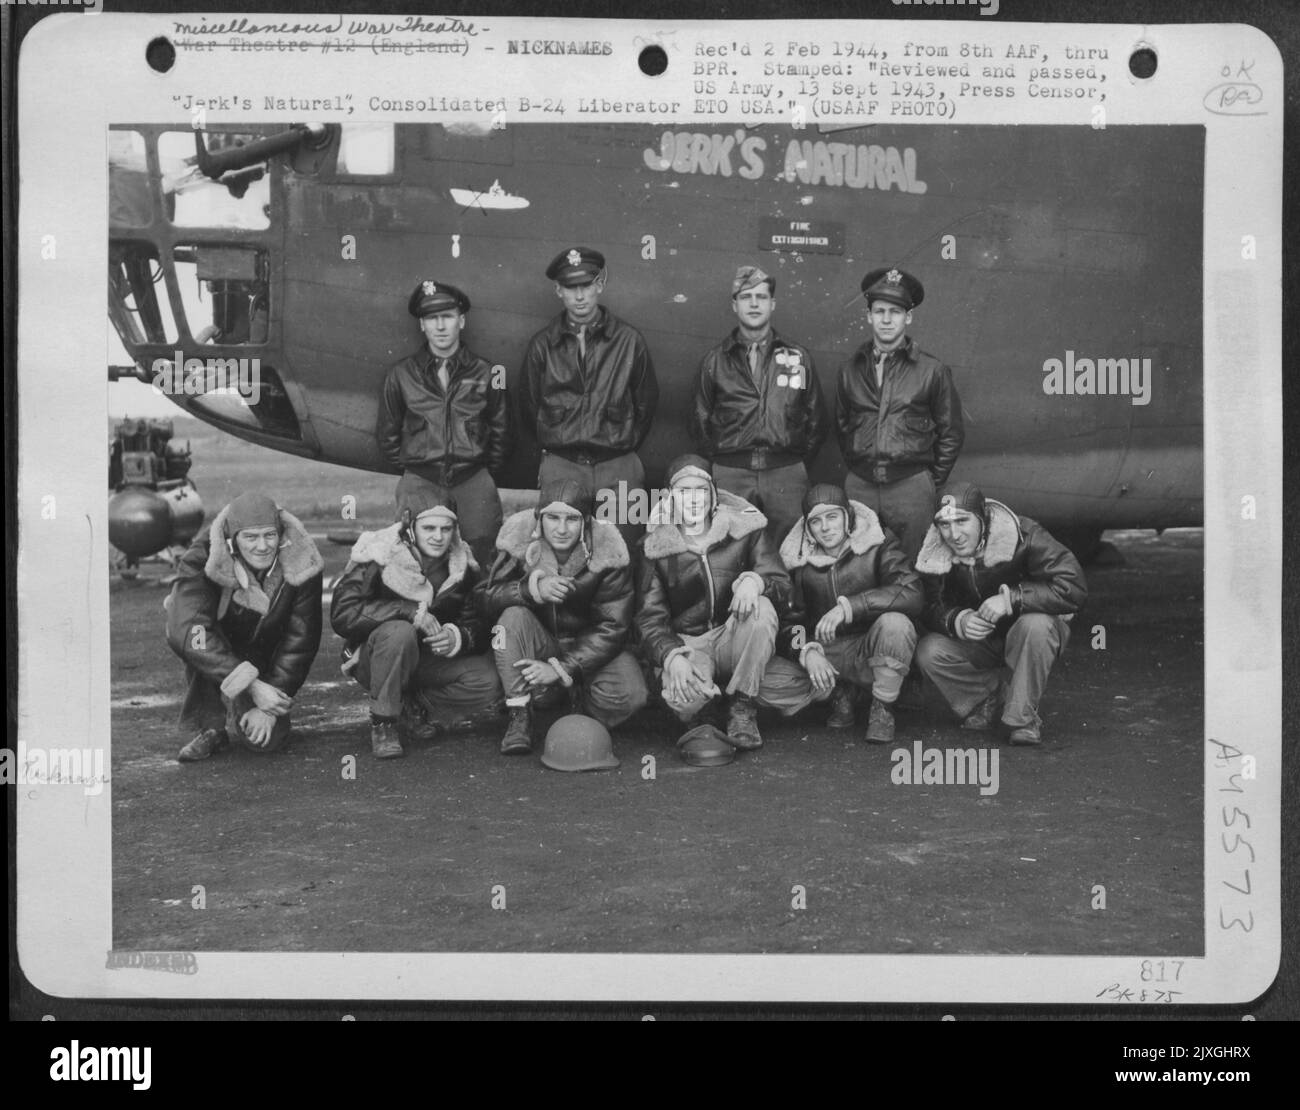 'Jerk'S Natural', Consolidated B-24 Liberator. Stock Photo